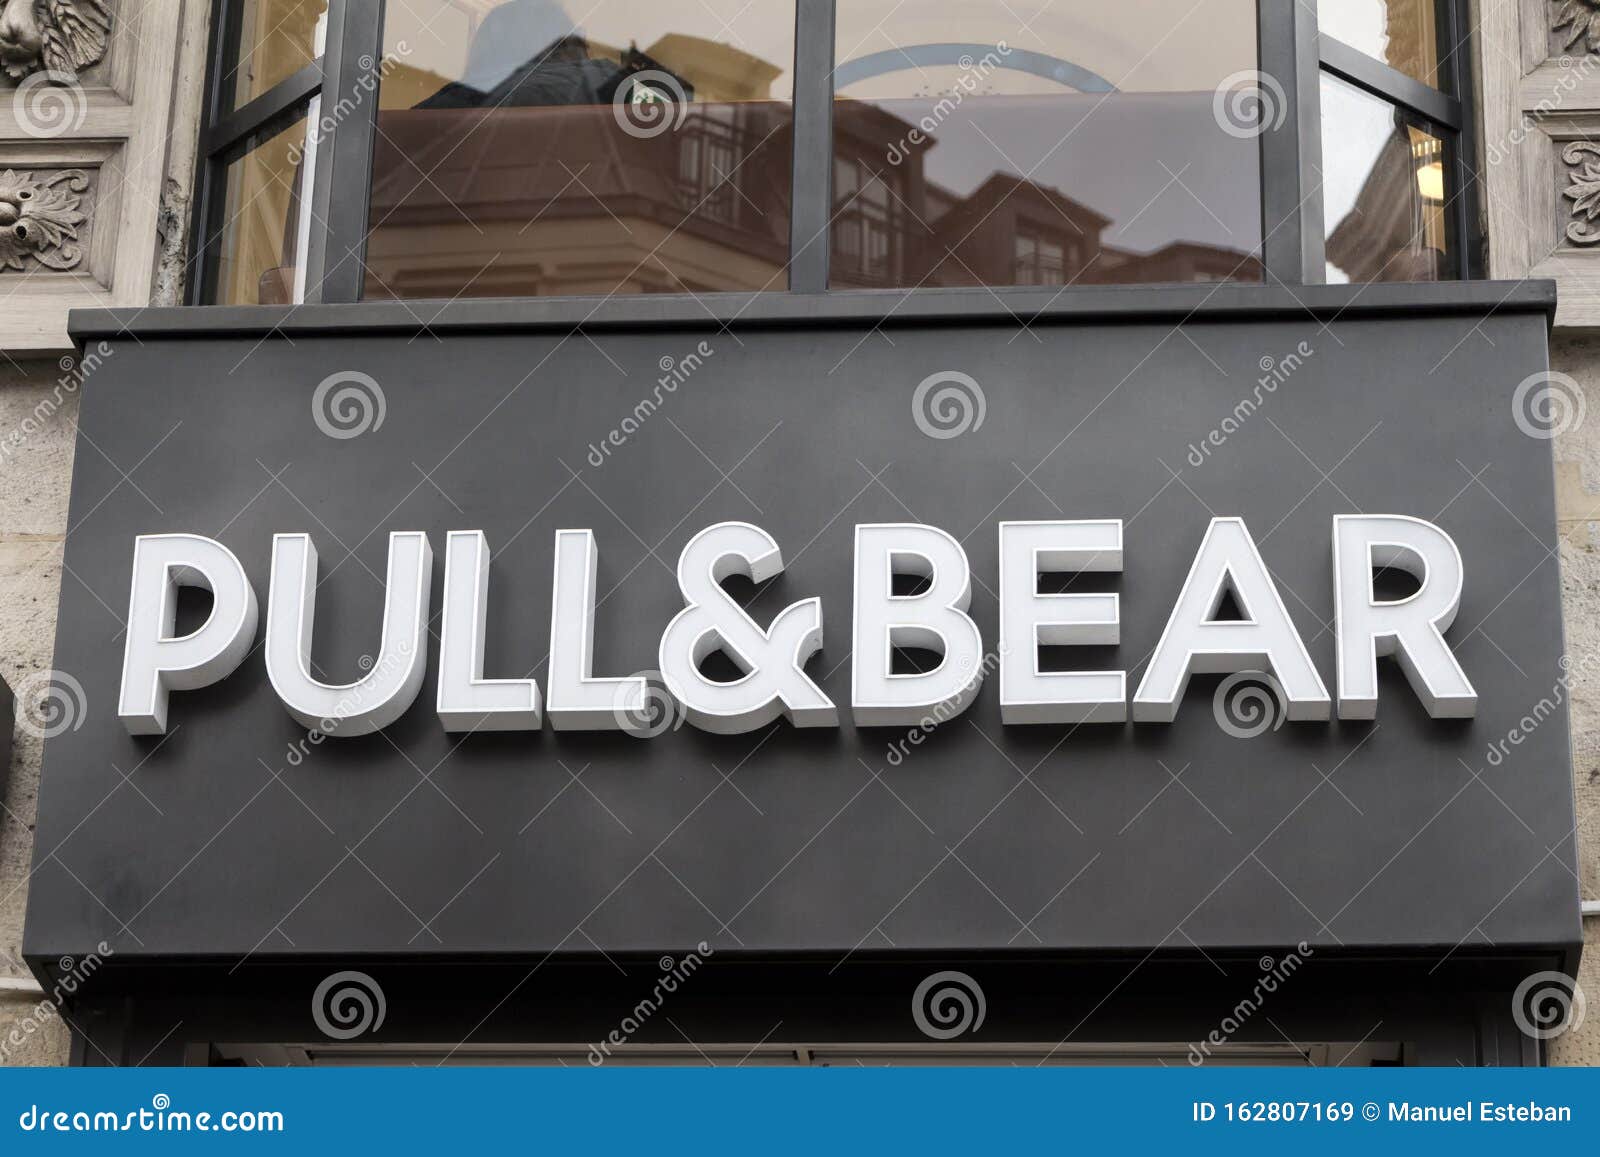 Pull&Bear Logo on Store Stock - Image of text, logo: 162807169